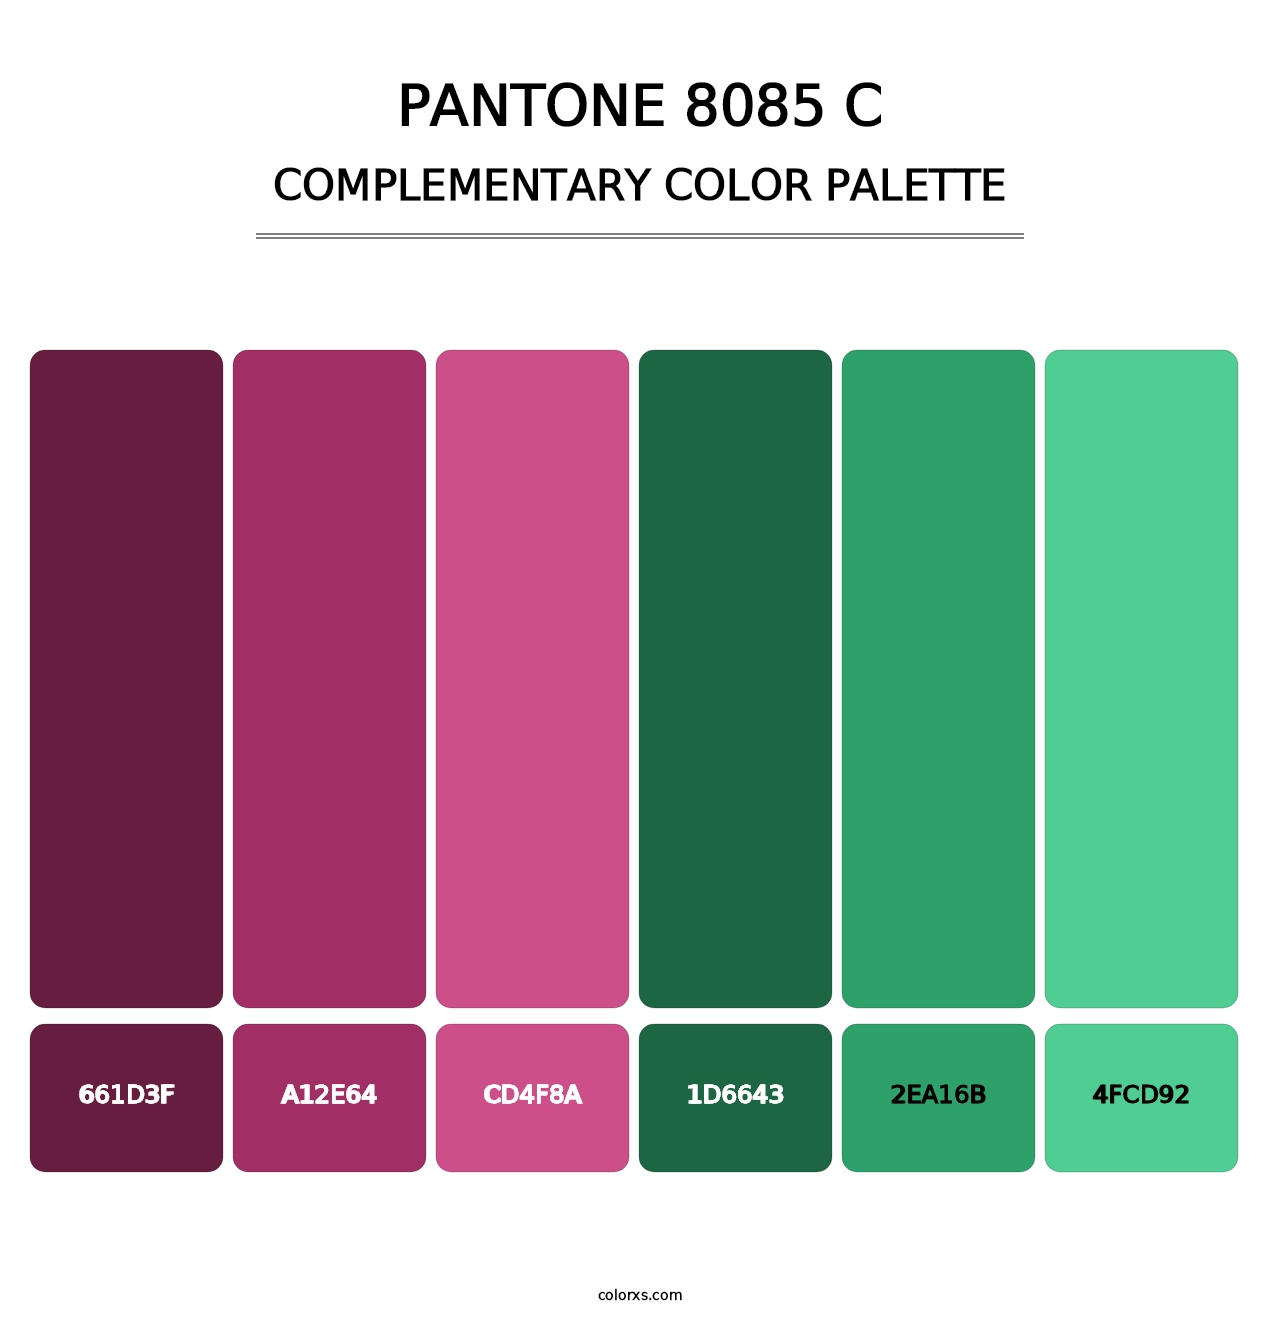 PANTONE 8085 C - Complementary Color Palette